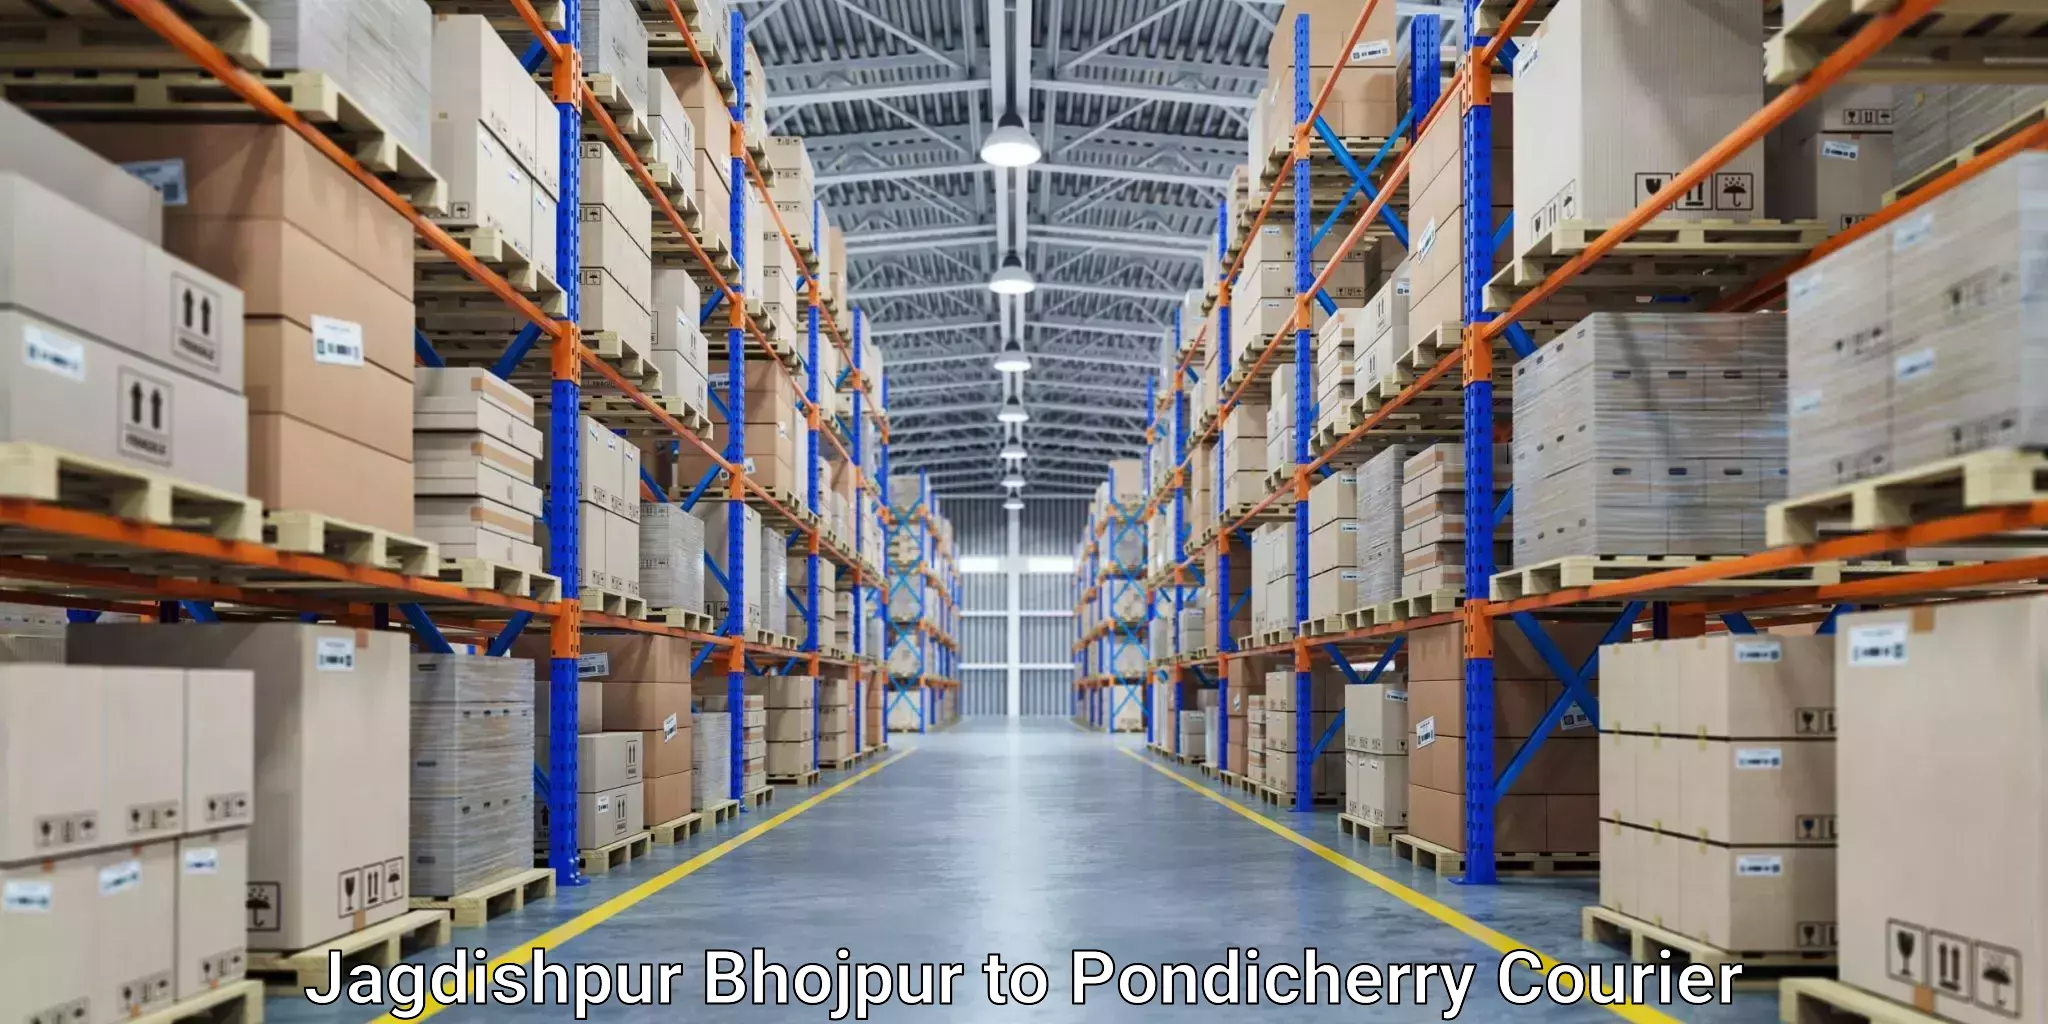 Global courier networks Jagdishpur Bhojpur to Pondicherry